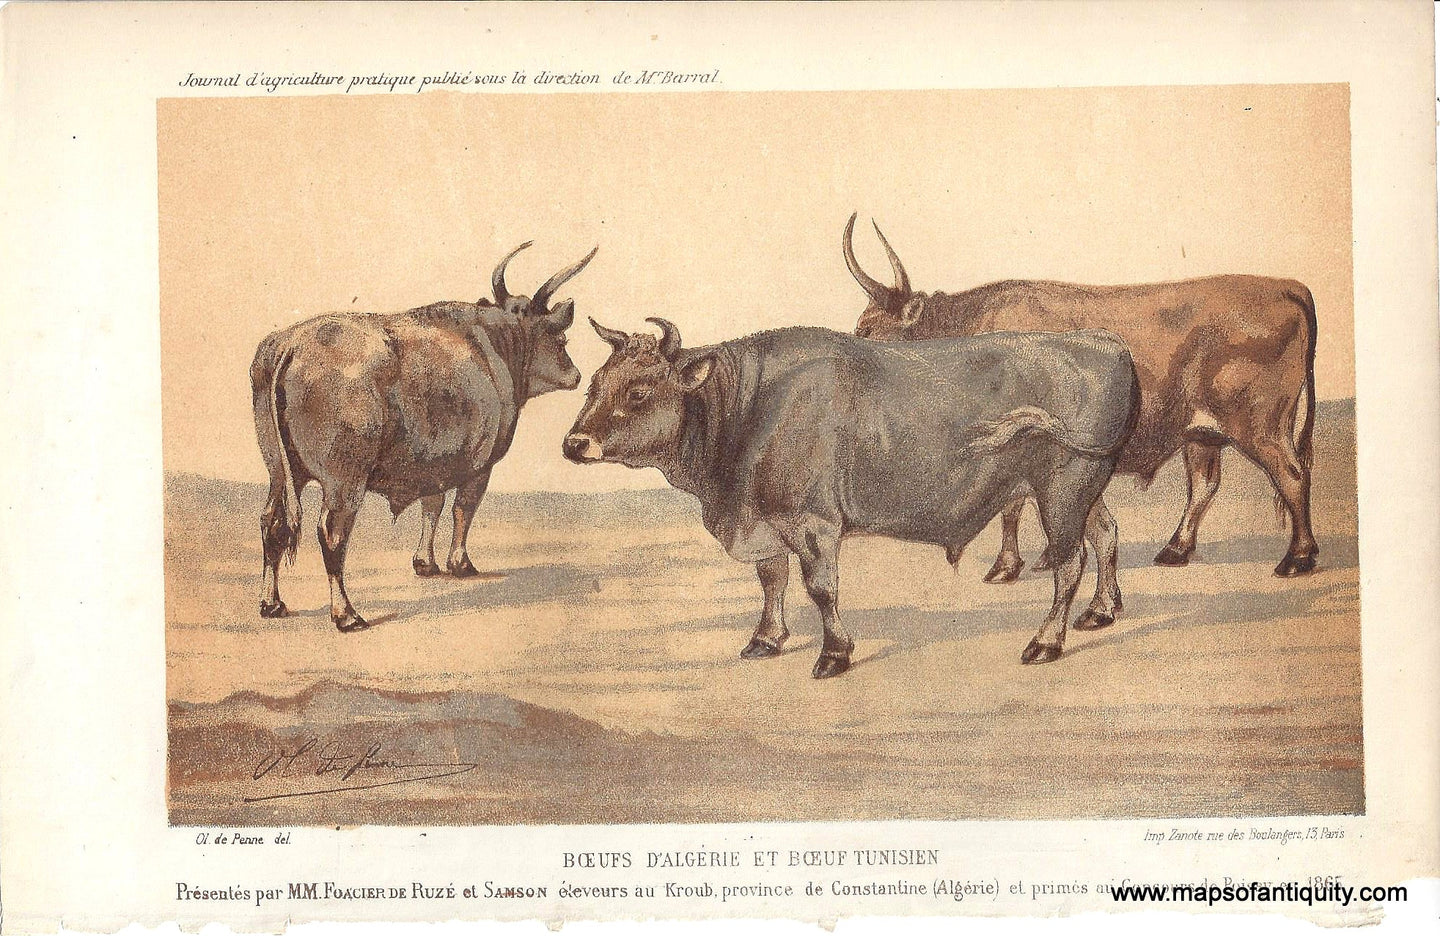 Genuine-Antique-Print-Boeufs-d-Algerie-et-Boeuf-Tunisien-Algerian-and-Tunisian-Bulls--c-1890-Ol-de-Penne-Maps-Of-Antiquity